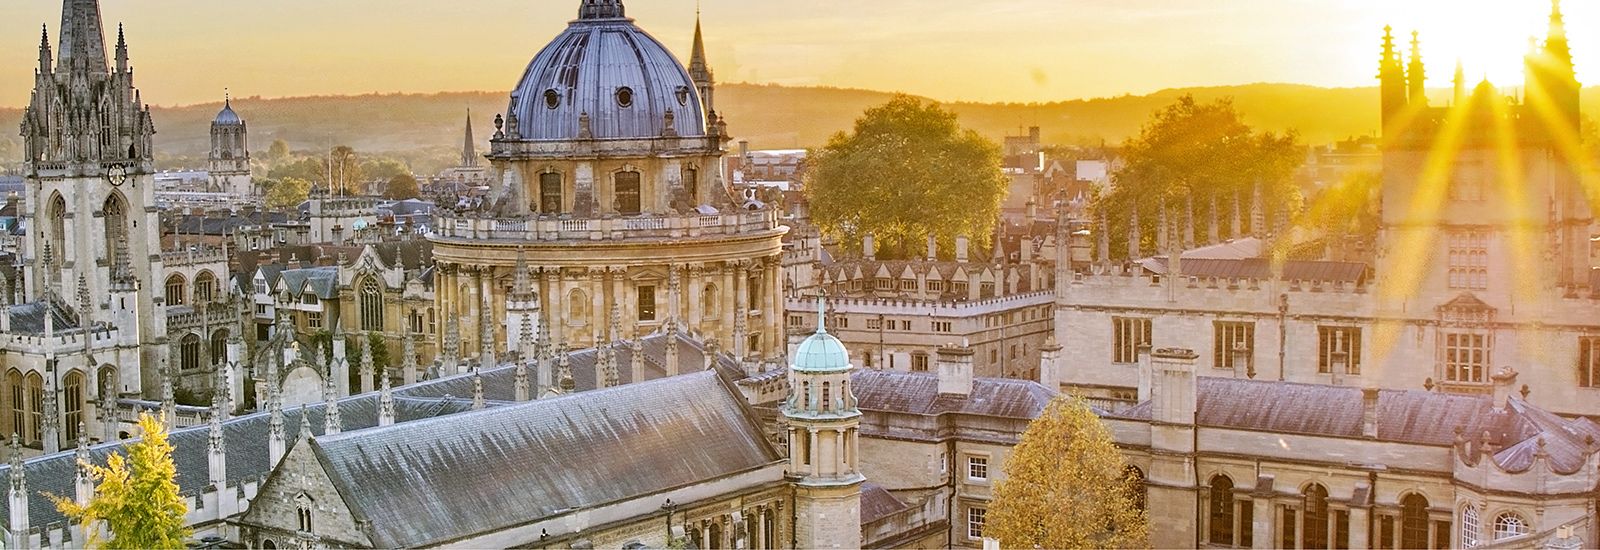 Oxford spires at dawn